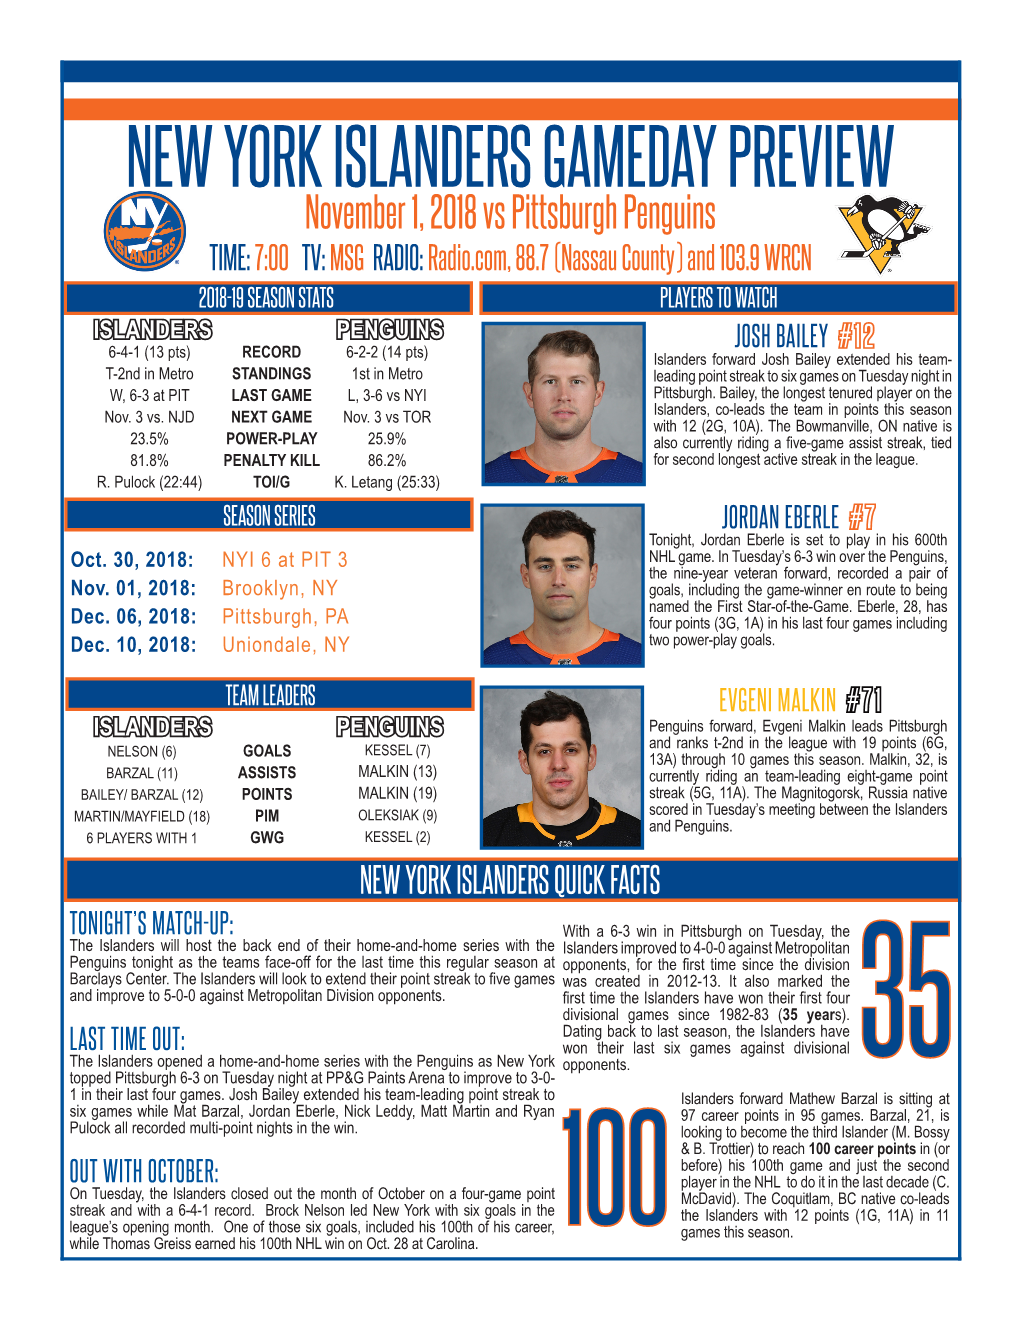 New York Islanders Gameday Preview